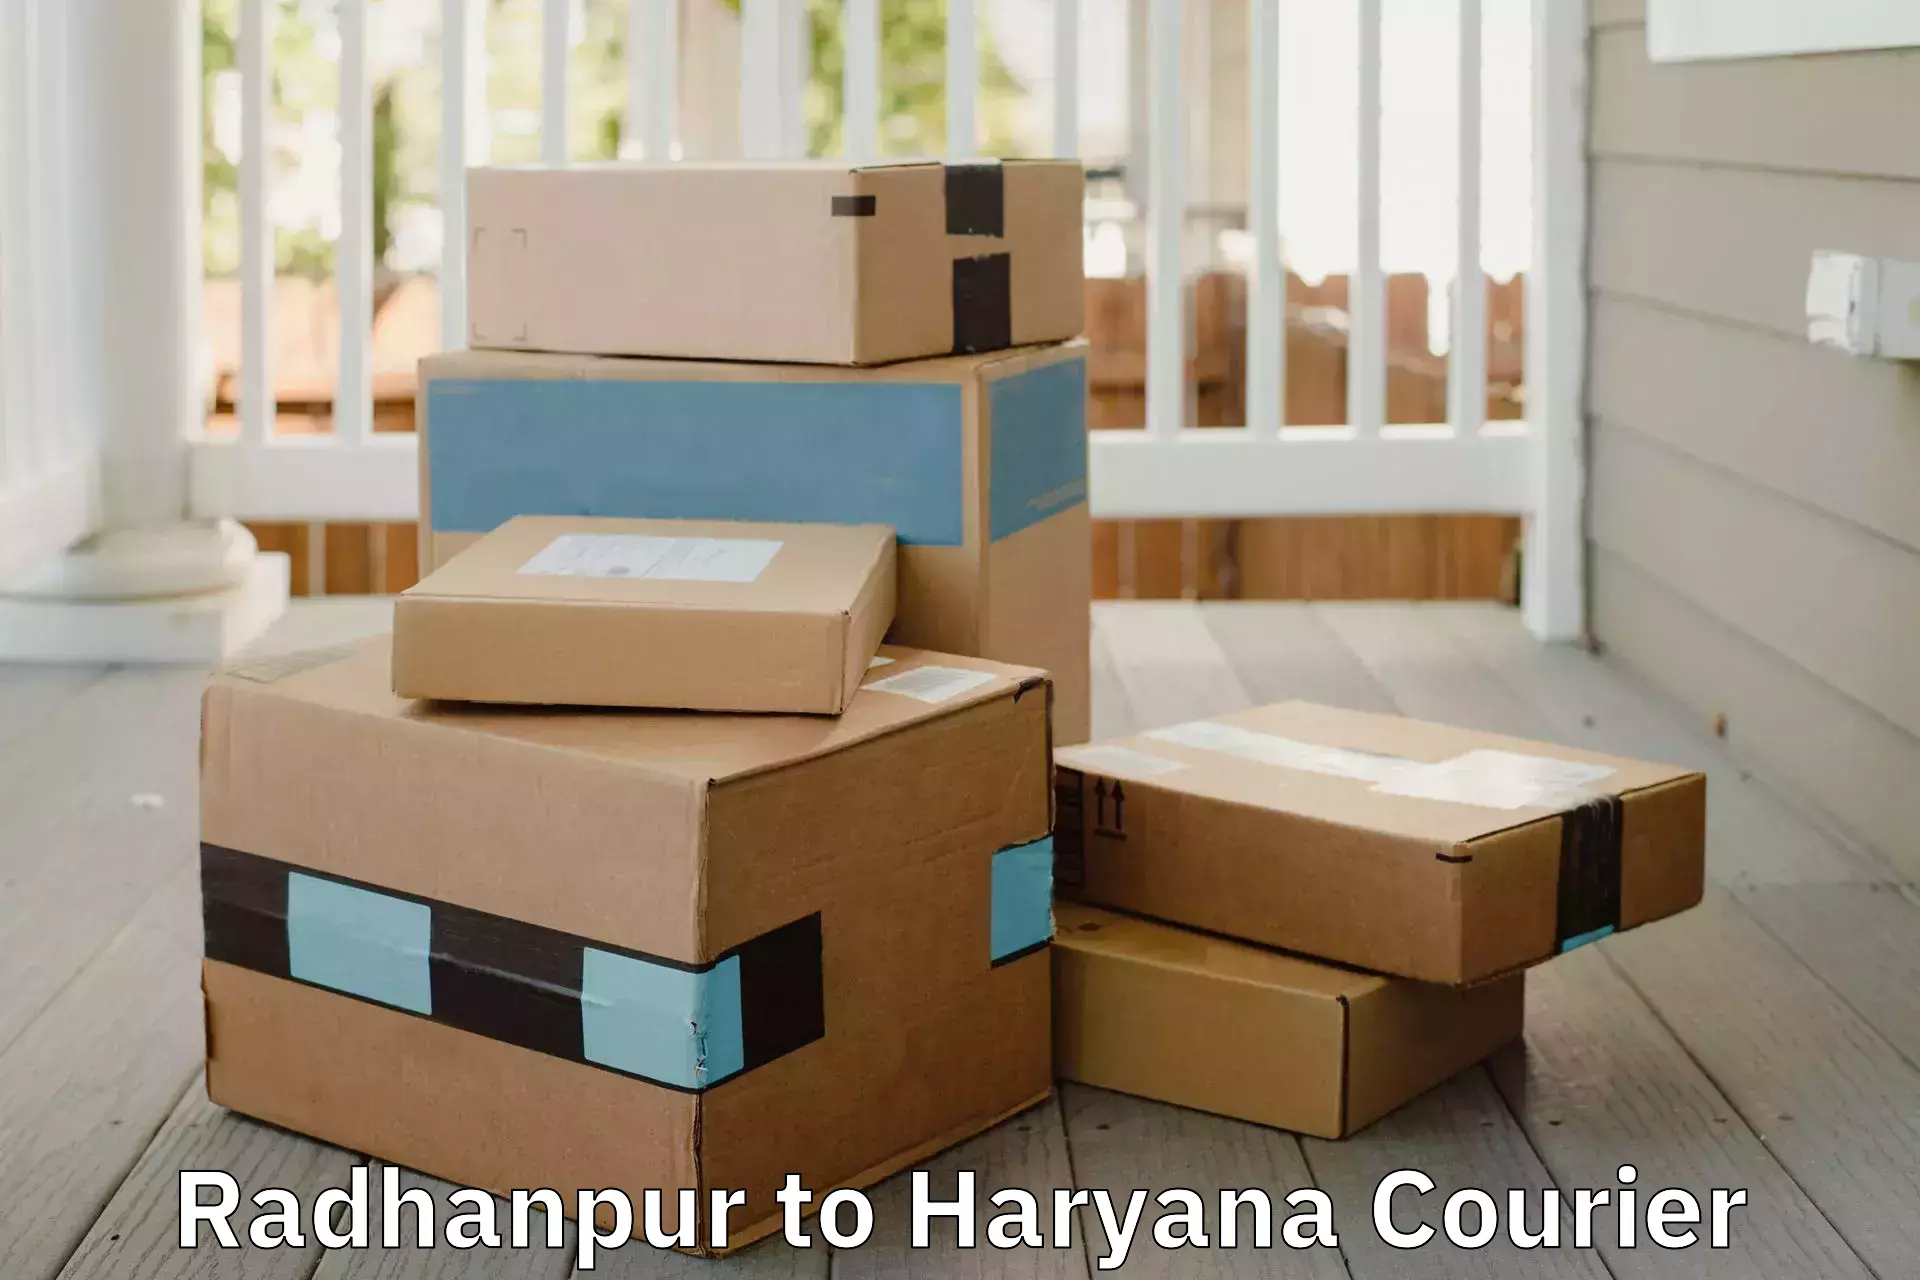 Professional moving company Radhanpur to Haryana